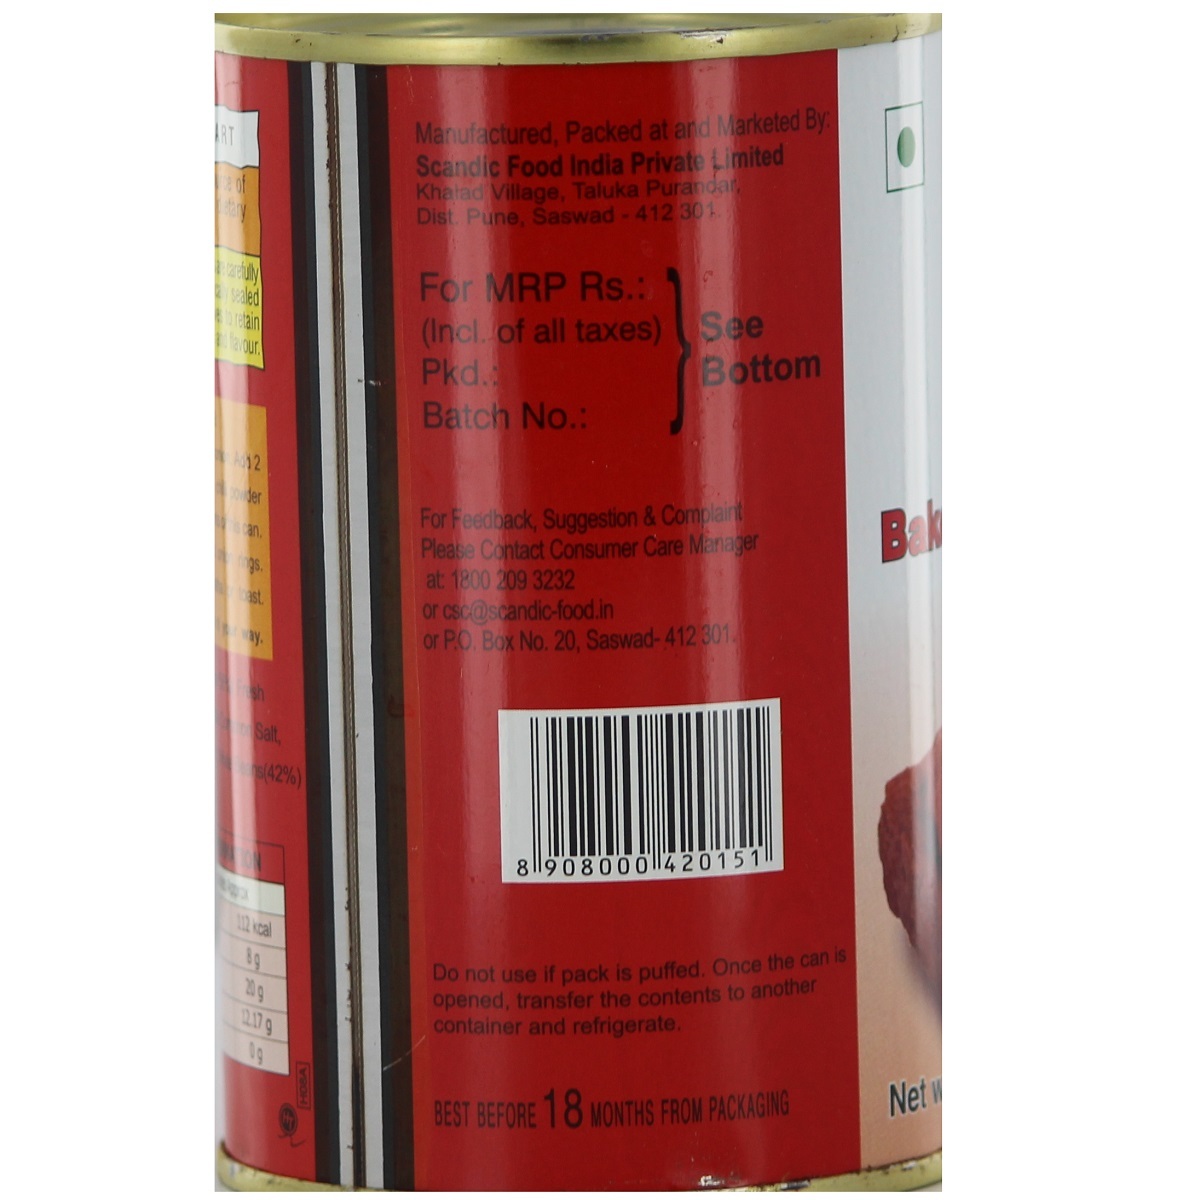 Sil Baked Beans in Tomato Sauce Tin 450g